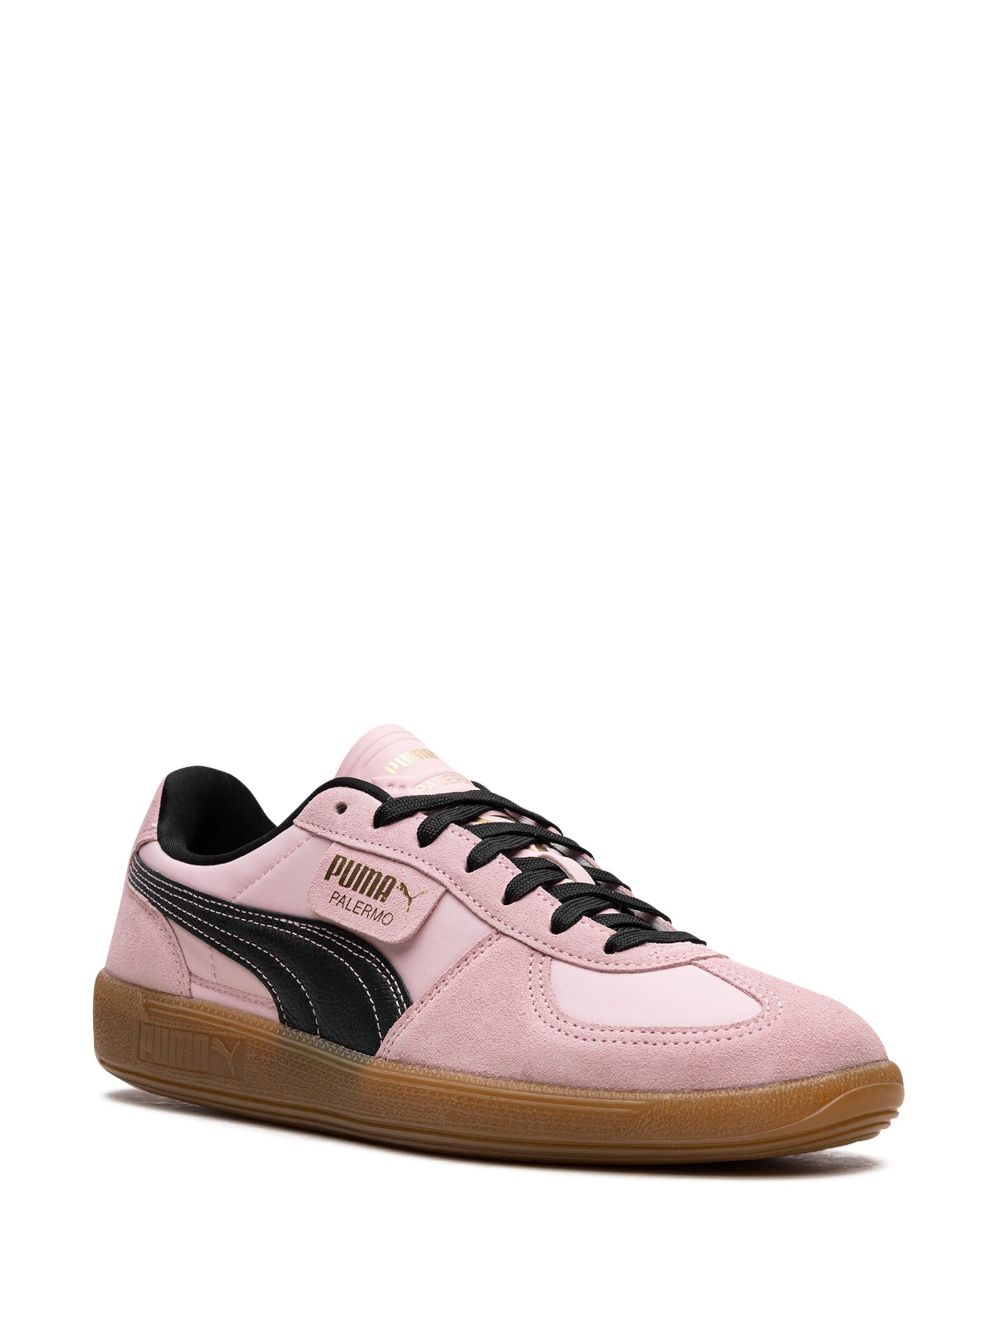 Shop Puma Palermo F.c. "bright Pink- Black" Sneakers